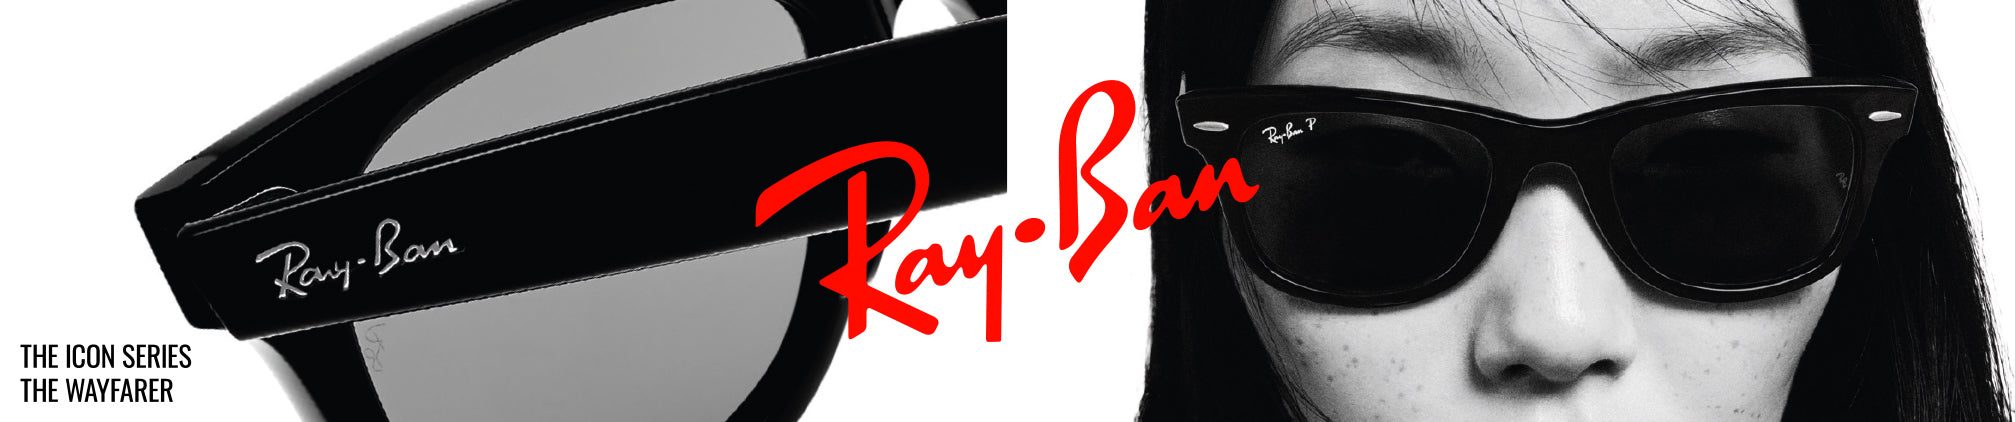 mandig Kilimanjaro Fellow Ray-Ban Sunglasses | Buy Online – Fashion Eyewear